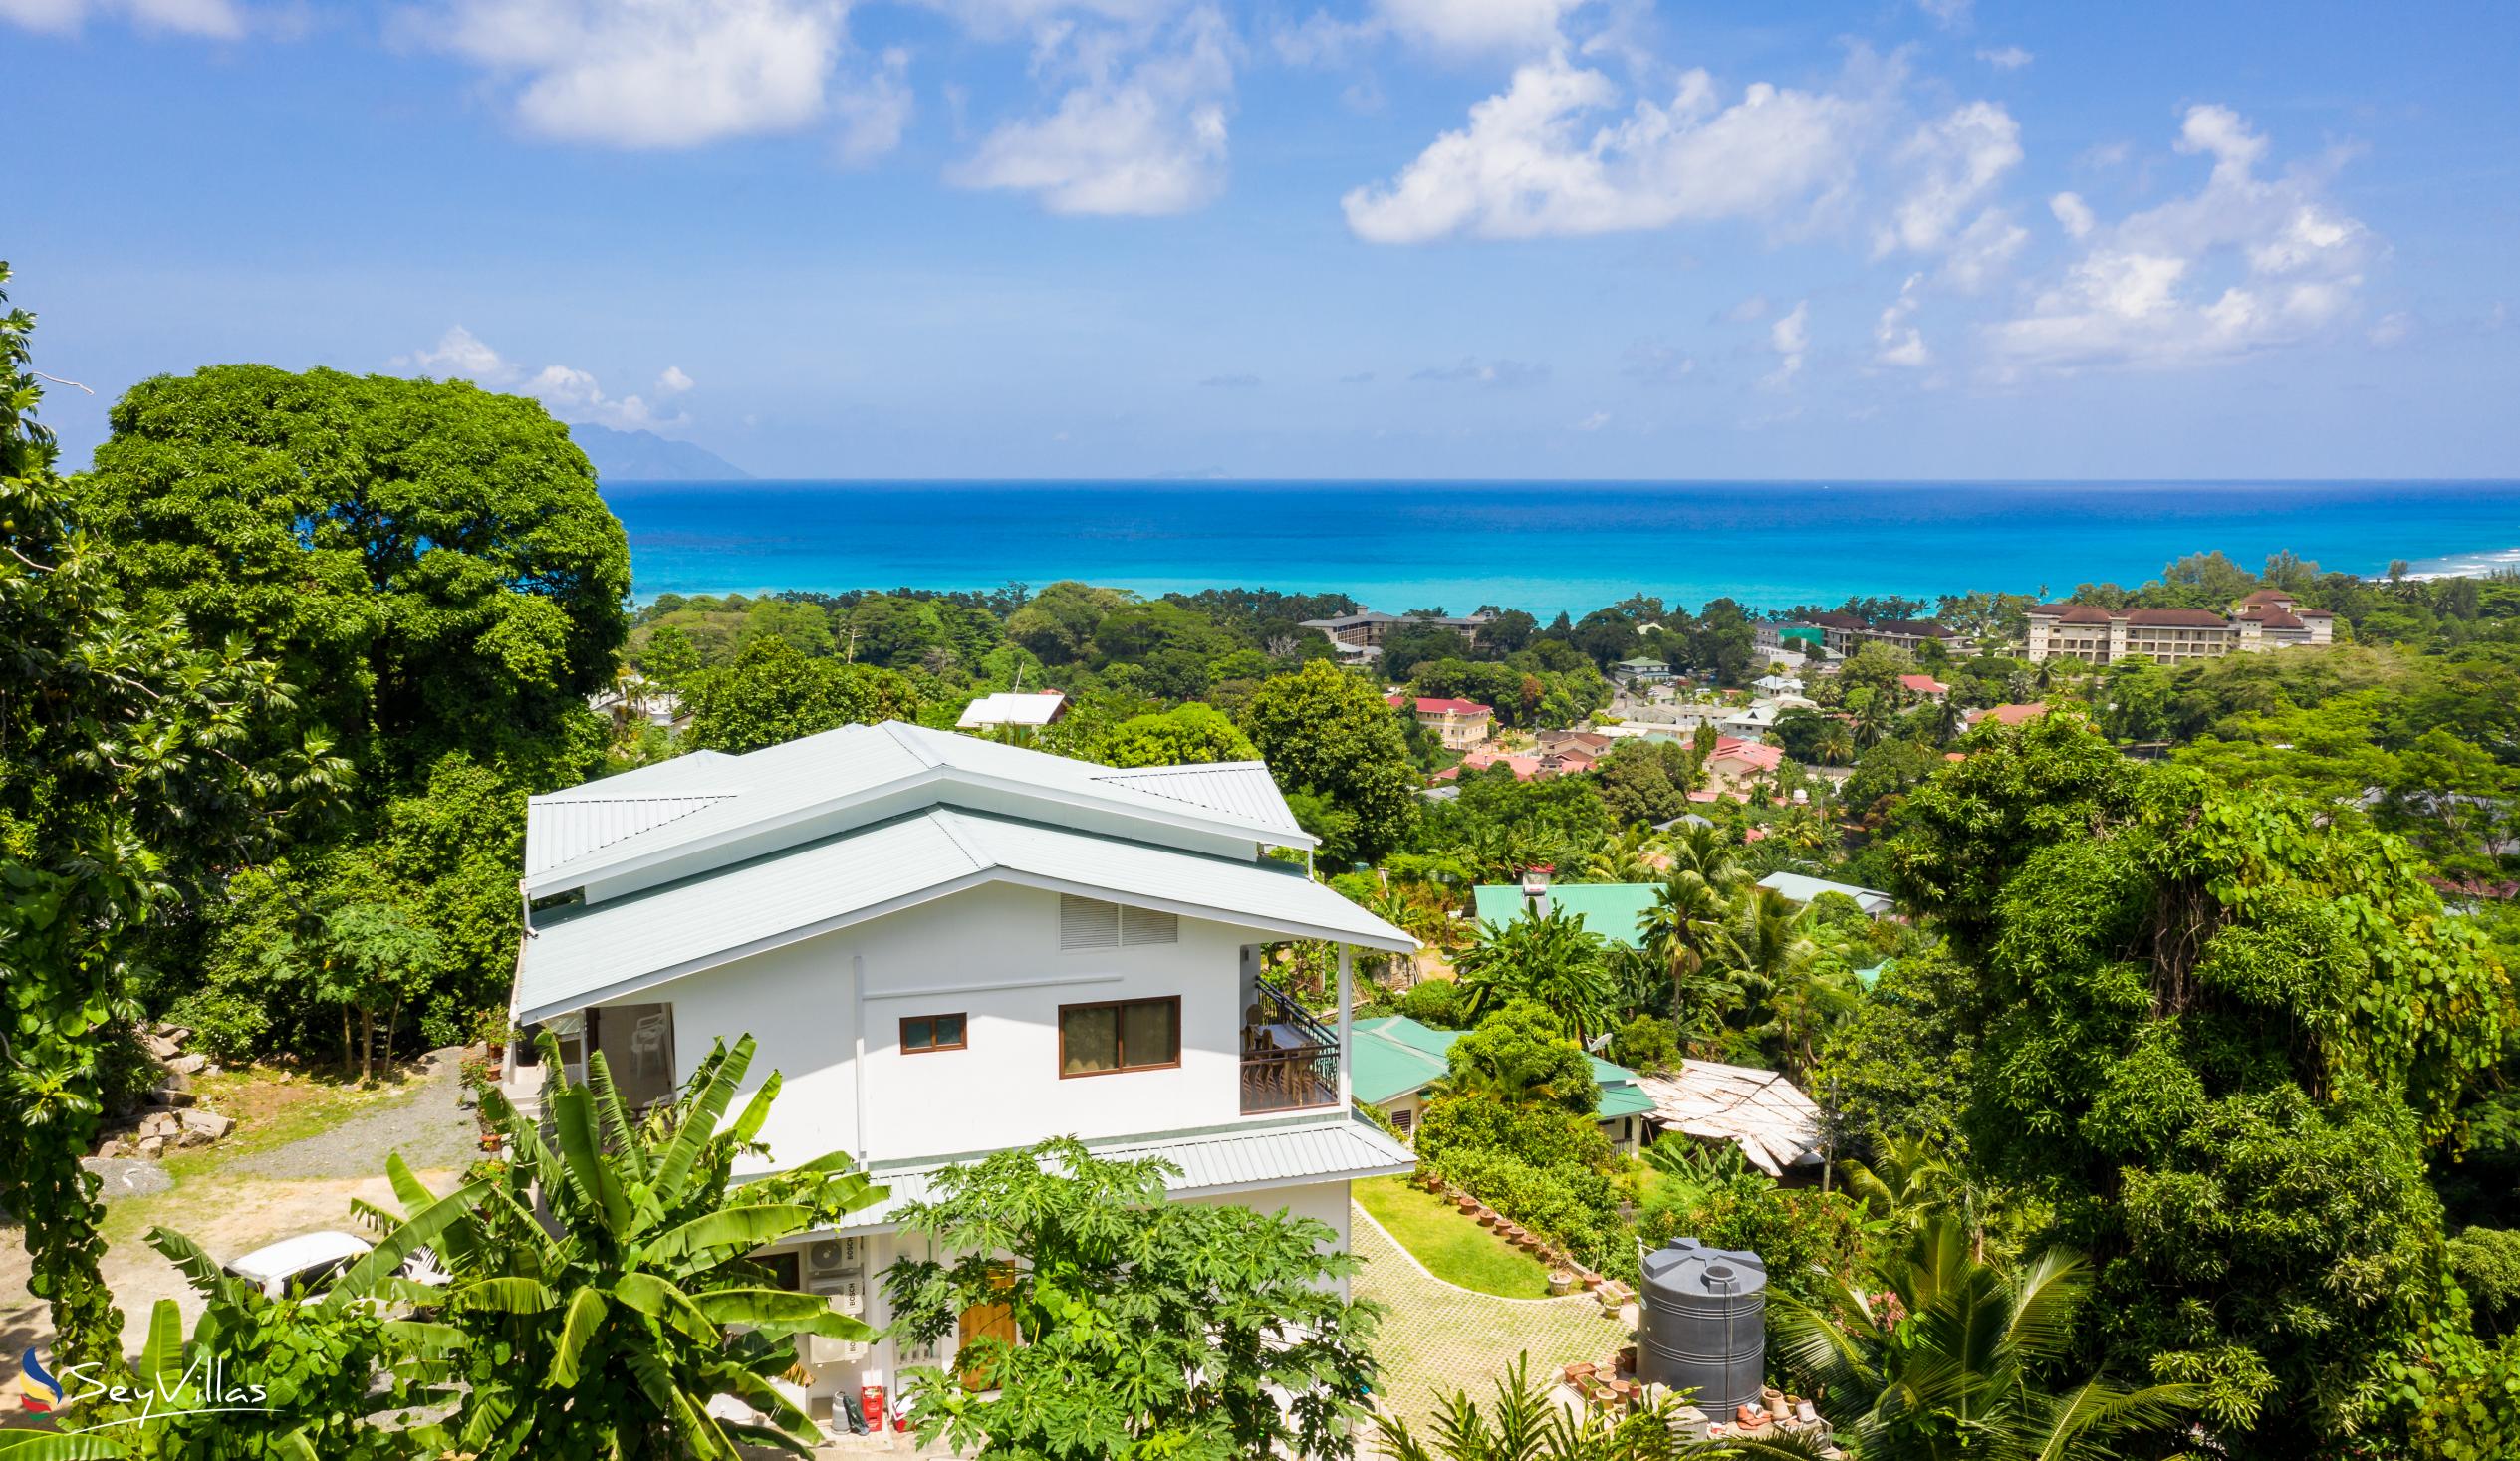 Foto 7: Tama's Holiday Apartments - Aussenbereich - Mahé (Seychellen)